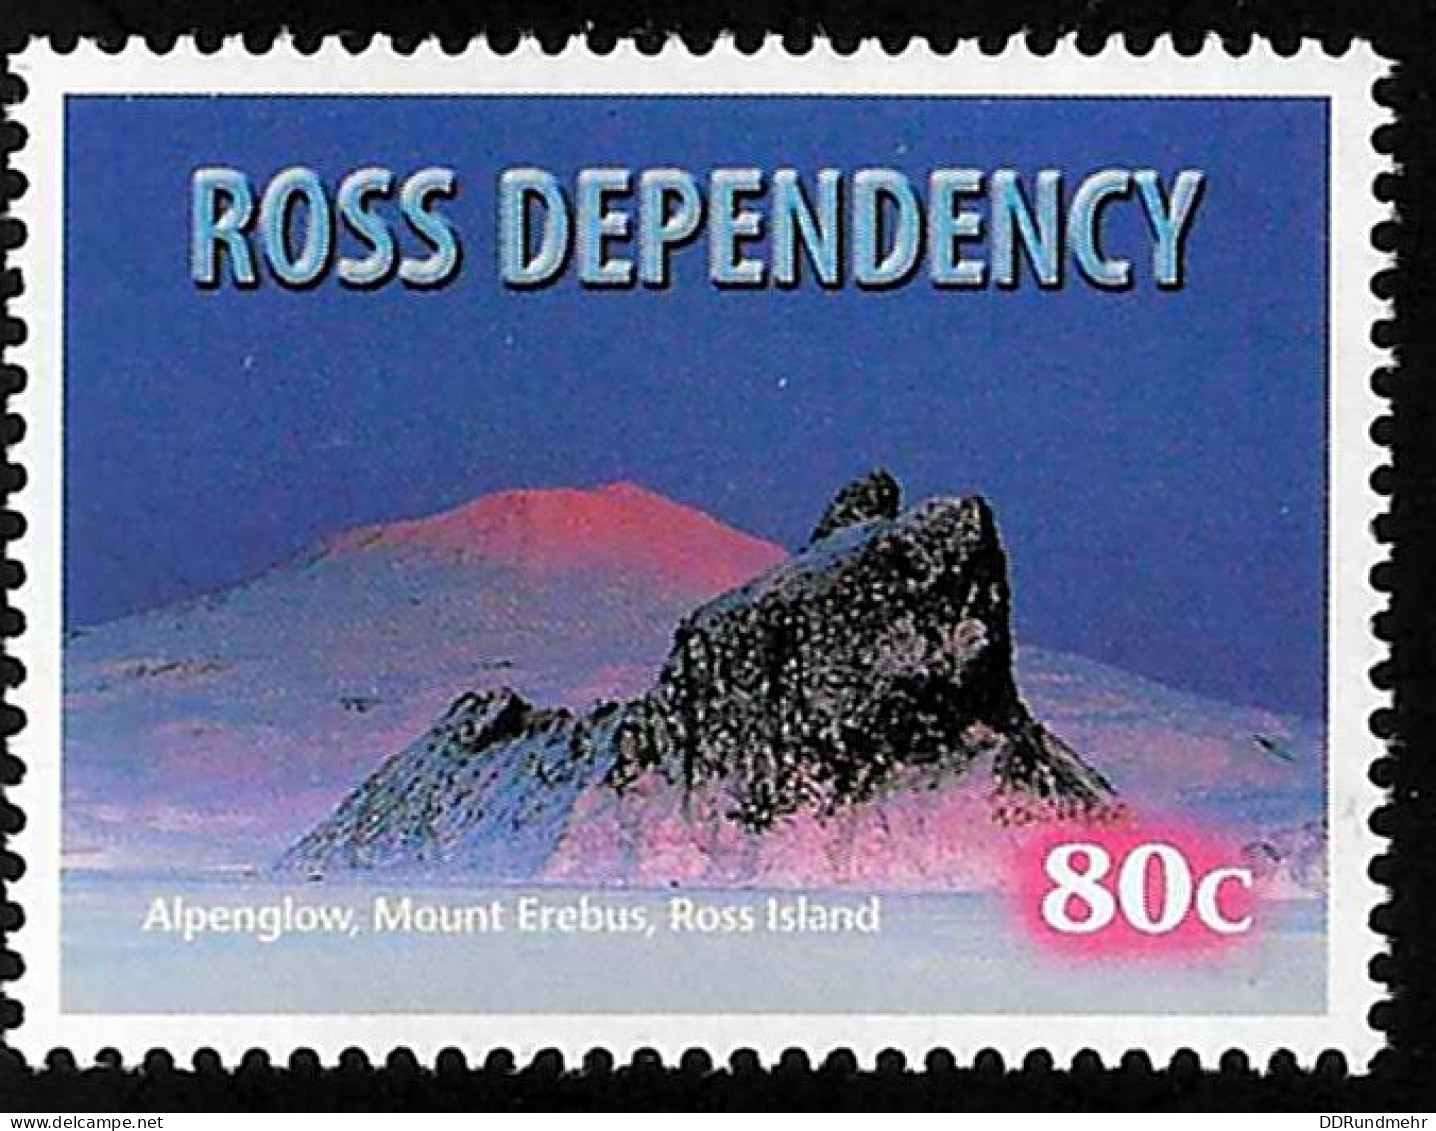 1999 Night Skies Michel NZ-RO 61 Stamp Number RO-NZ L56 Yvert Et Tellier NZ-RO 67 Stanley Gibbons NZ-RO 61 Xx MNH - Unused Stamps